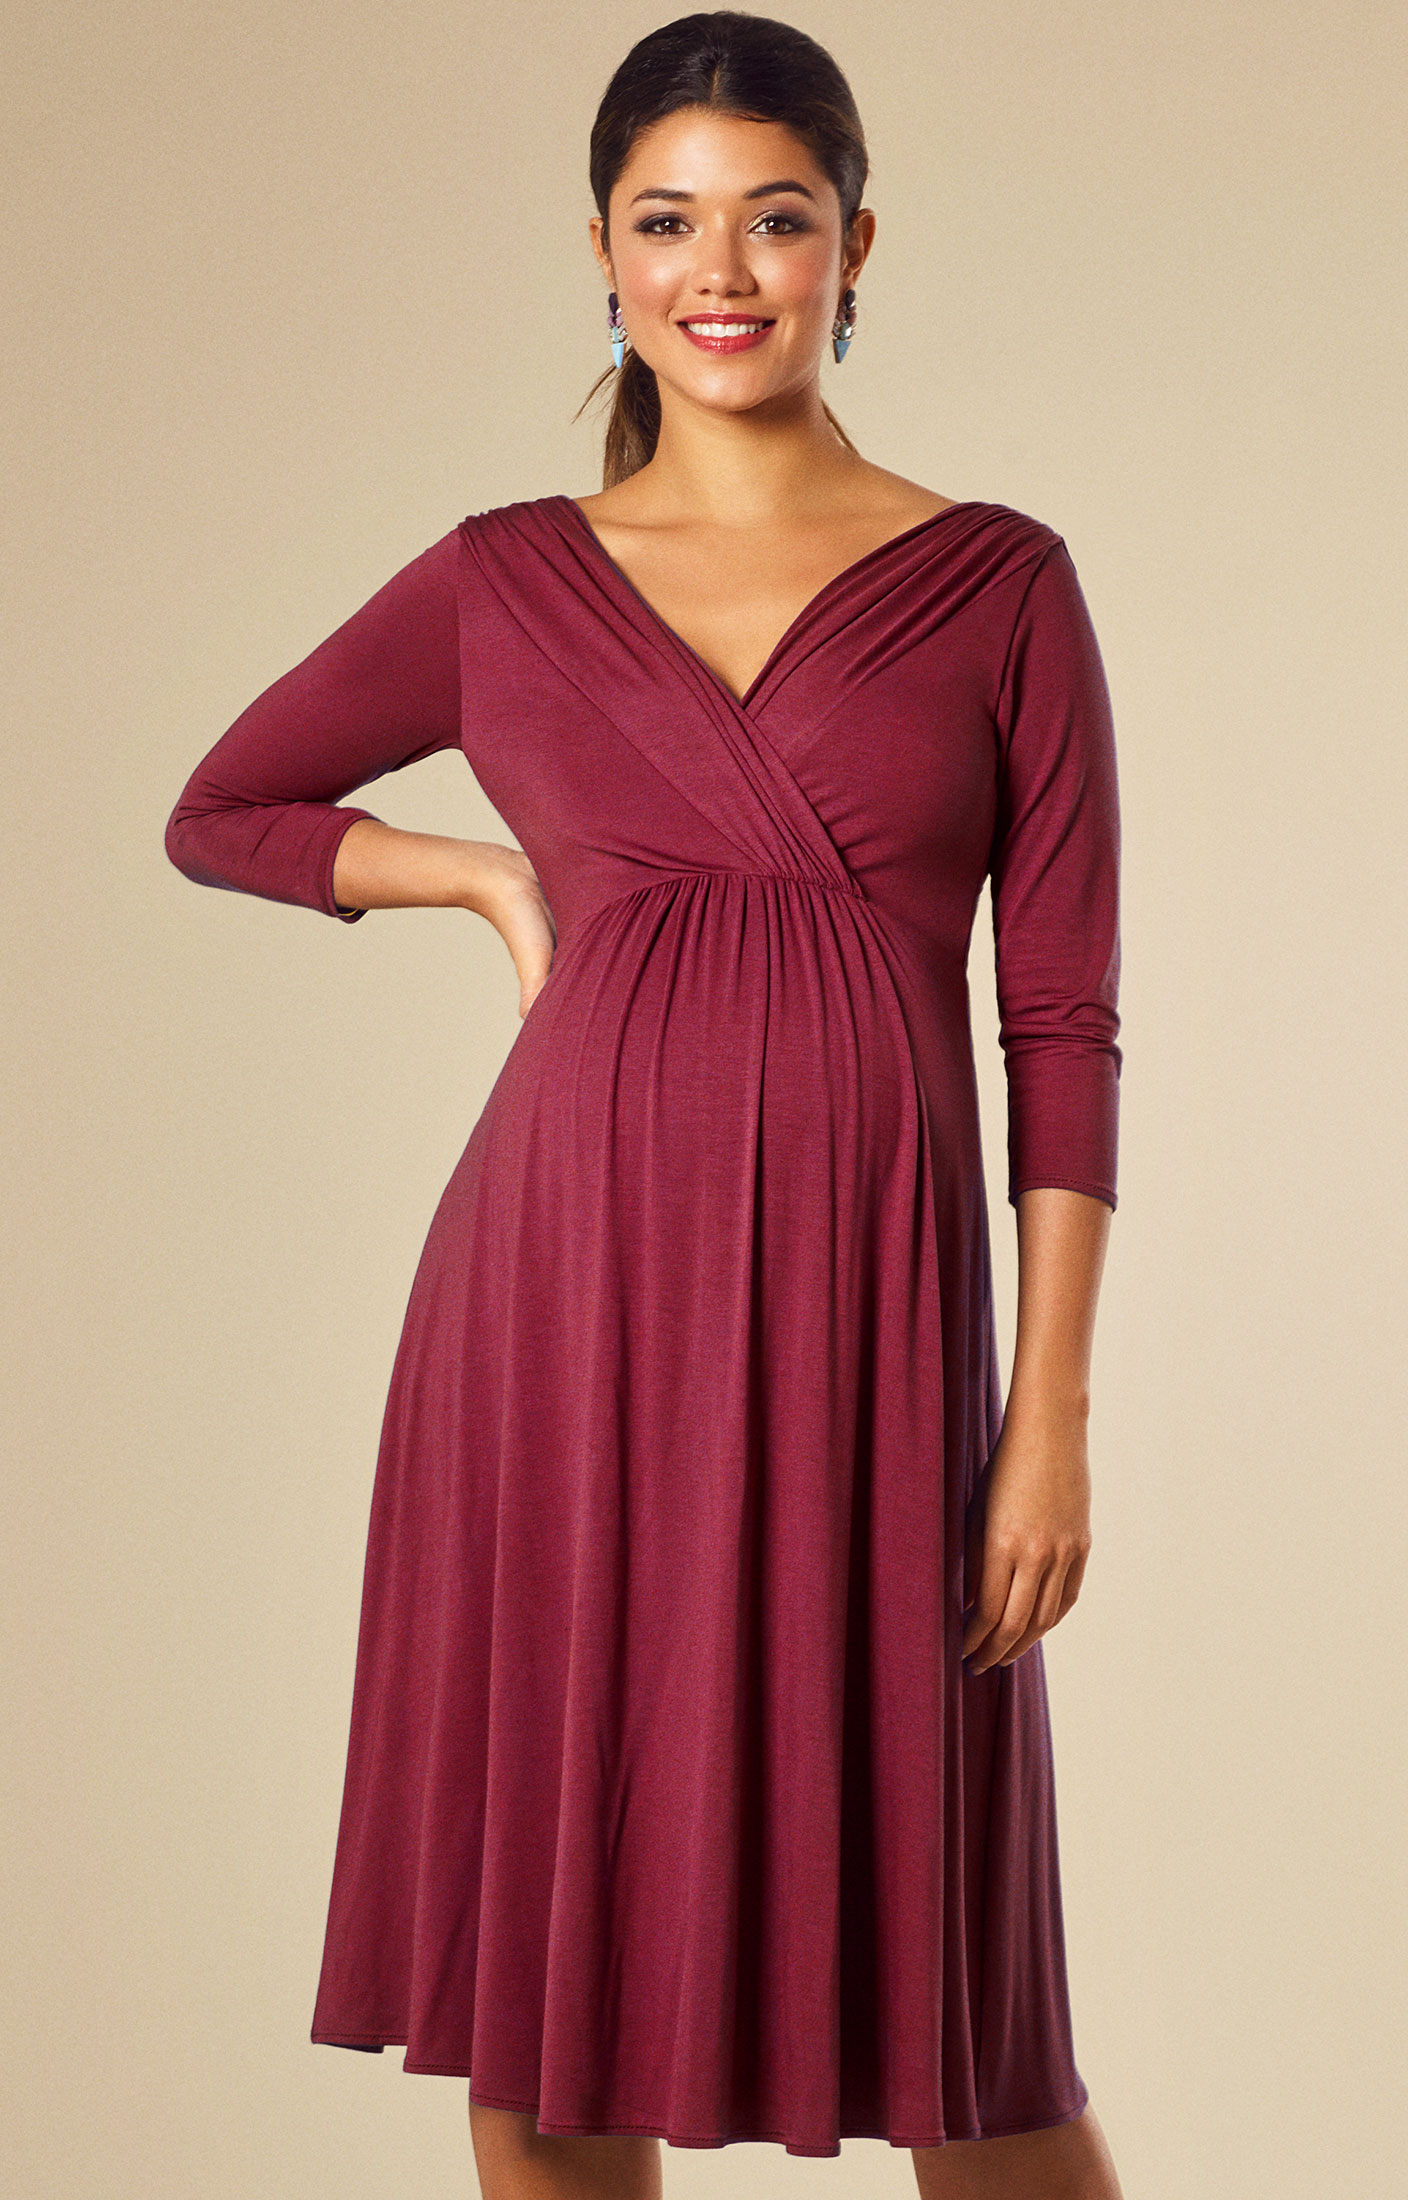 Willow Maternity Dress (Burgundy) - Maternity Wedding Dresses, Evening ...